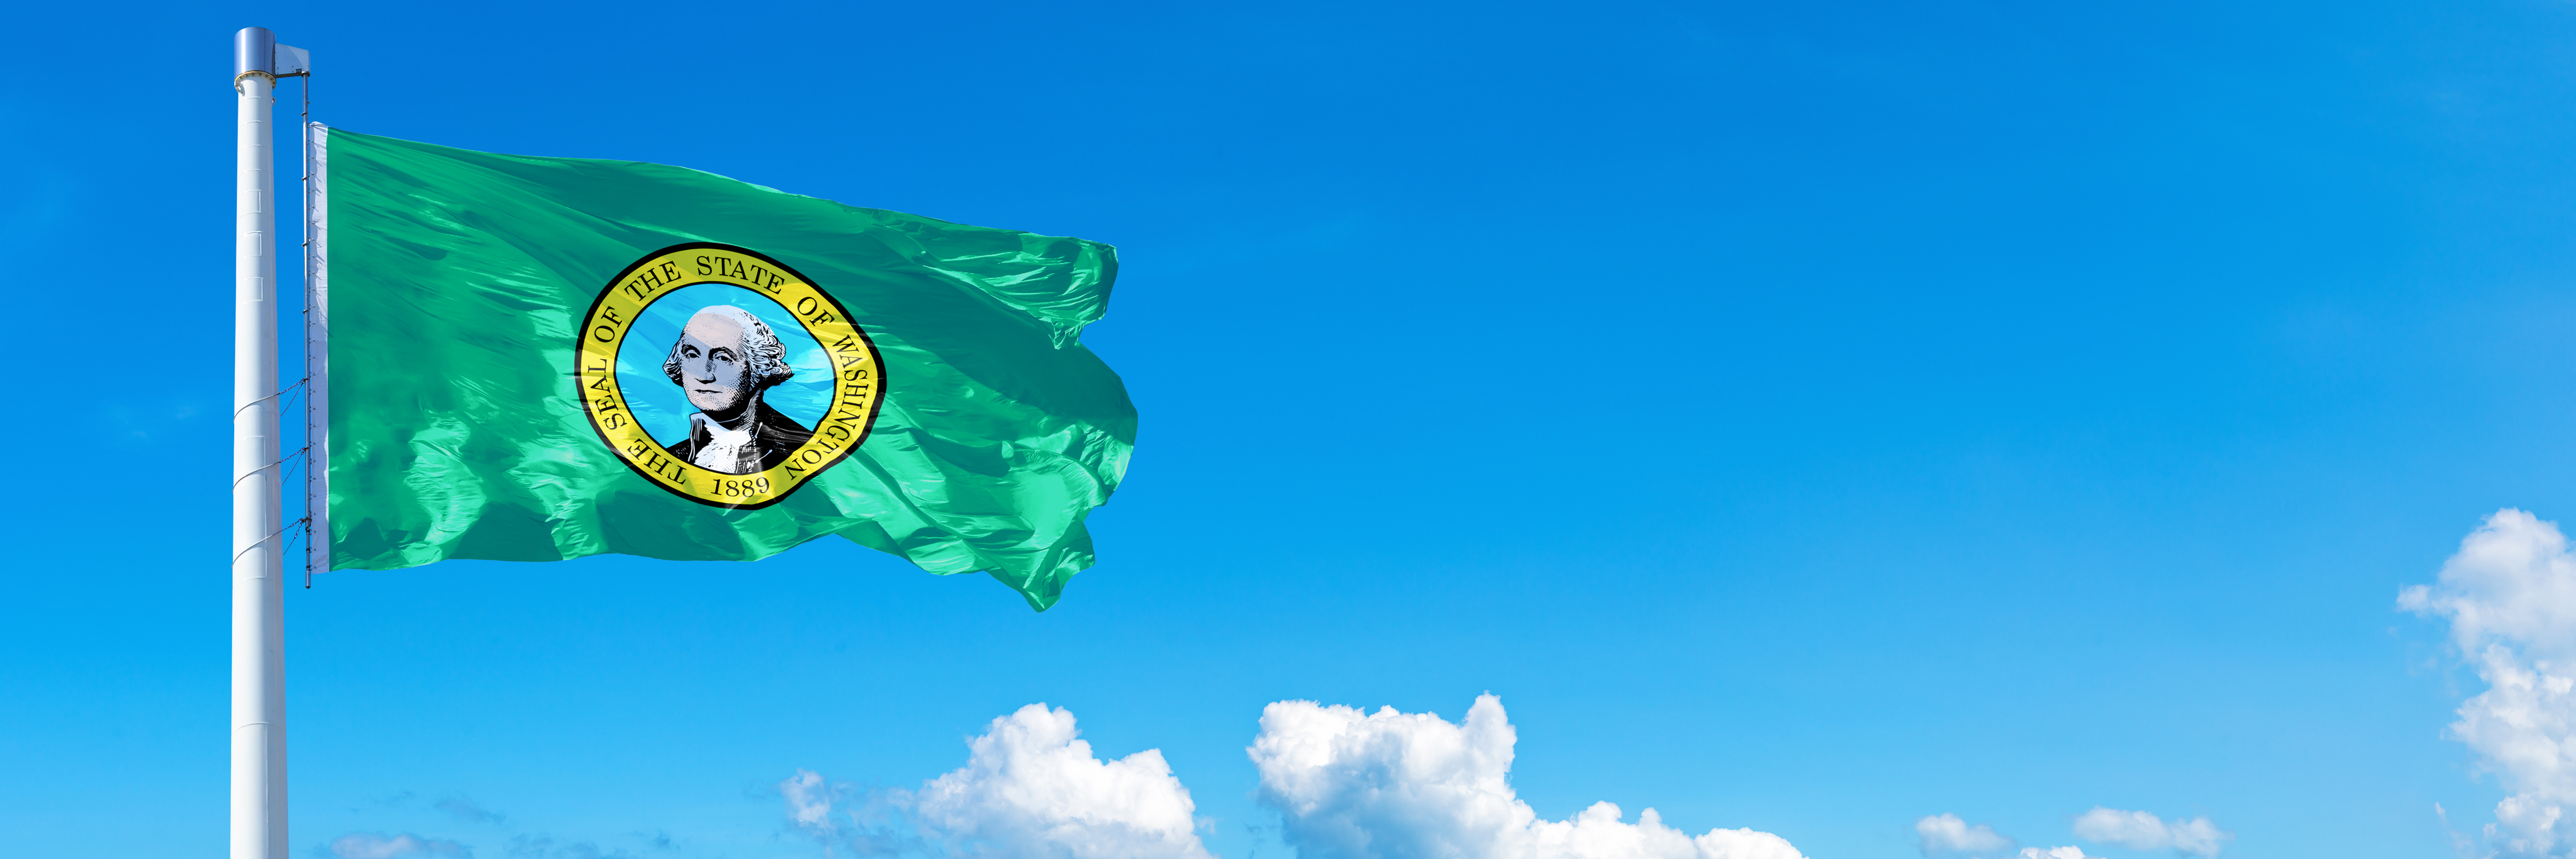 washington state flag with a sky background